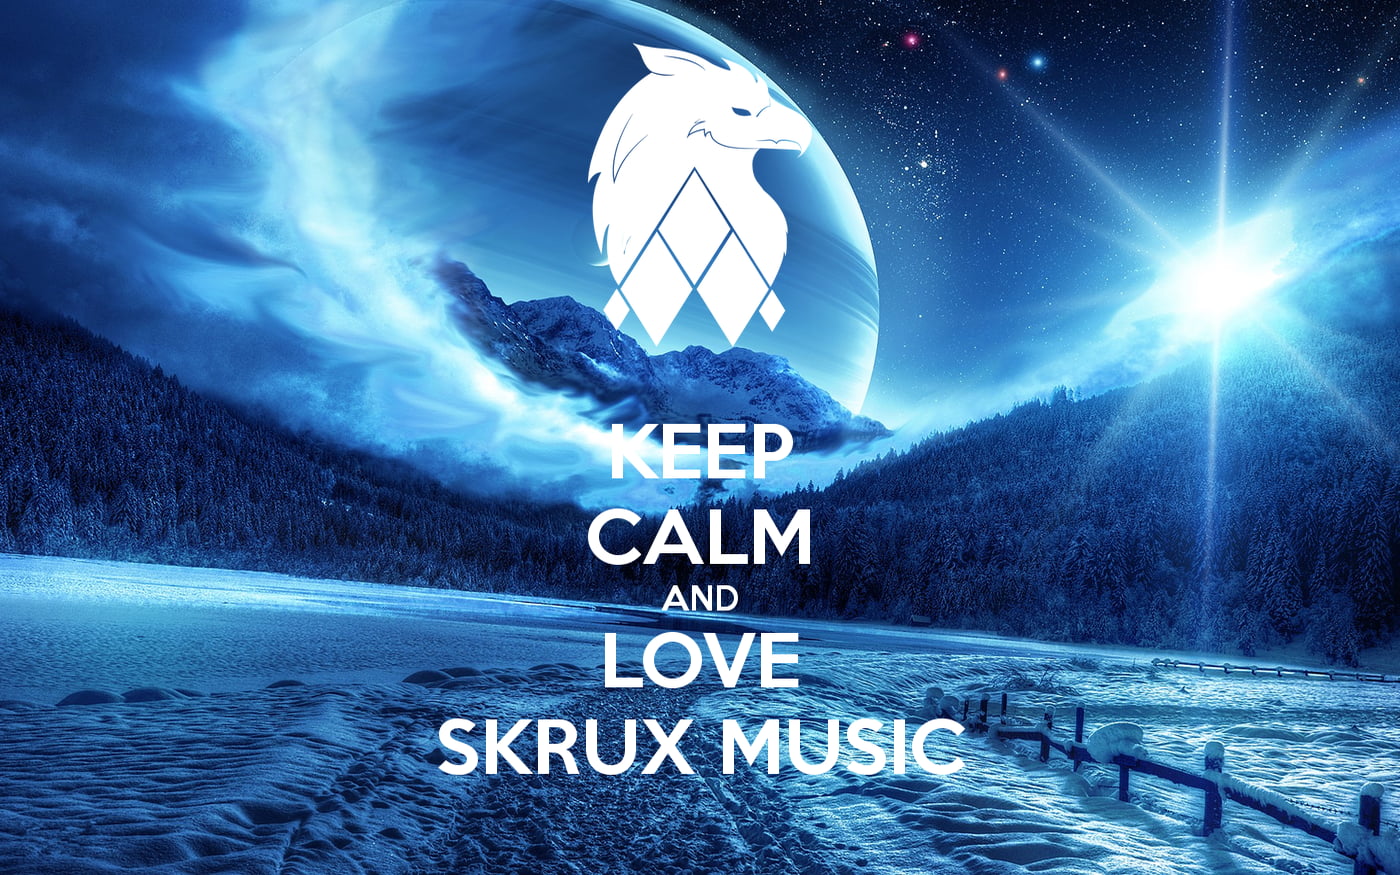 keep calm and love SKRUX music text overlay, snow, mountains